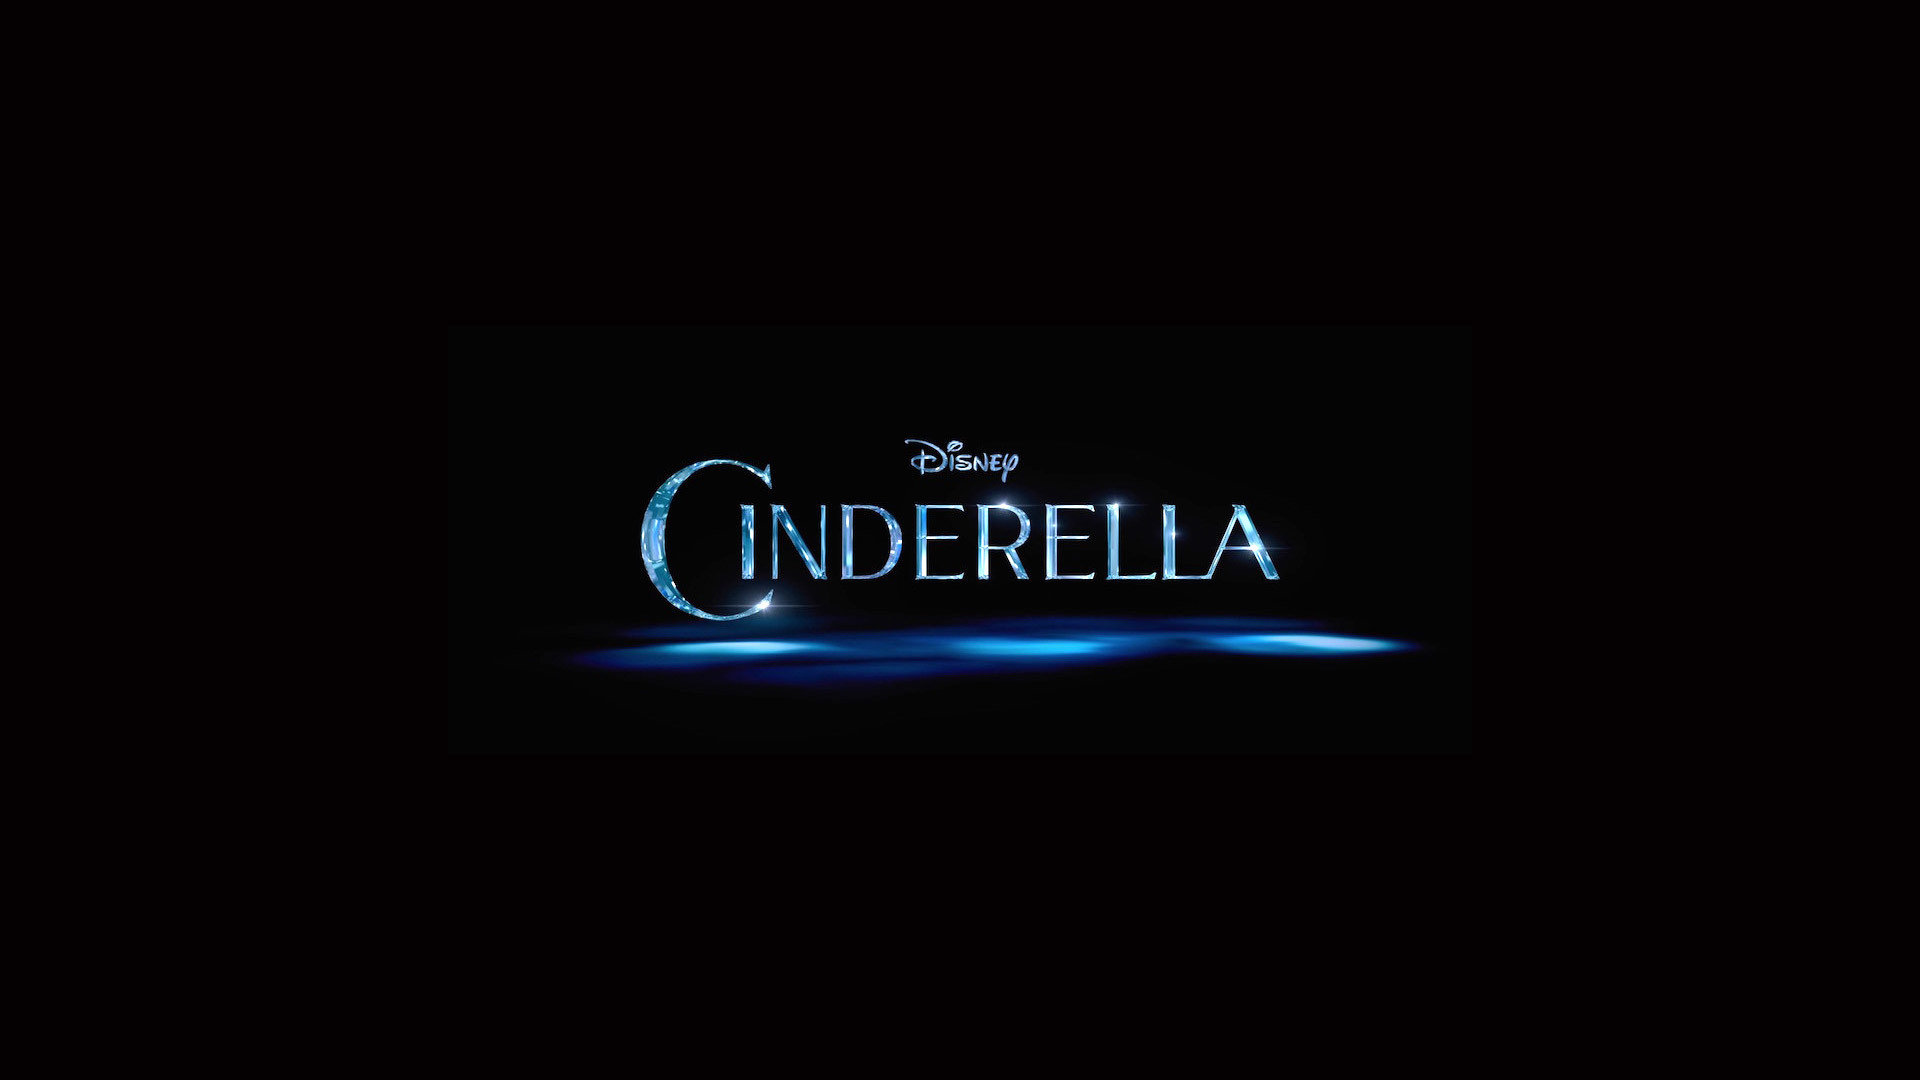 1920x1080 Cinderella Movie Logo Wallpaper 52209